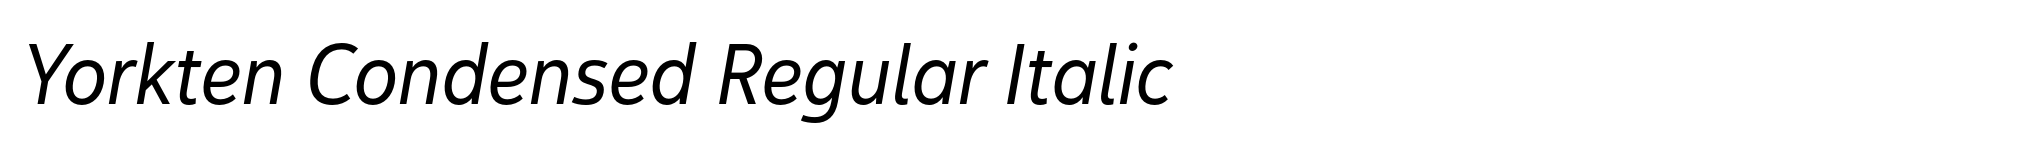 Yorkten Condensed Regular Italic image